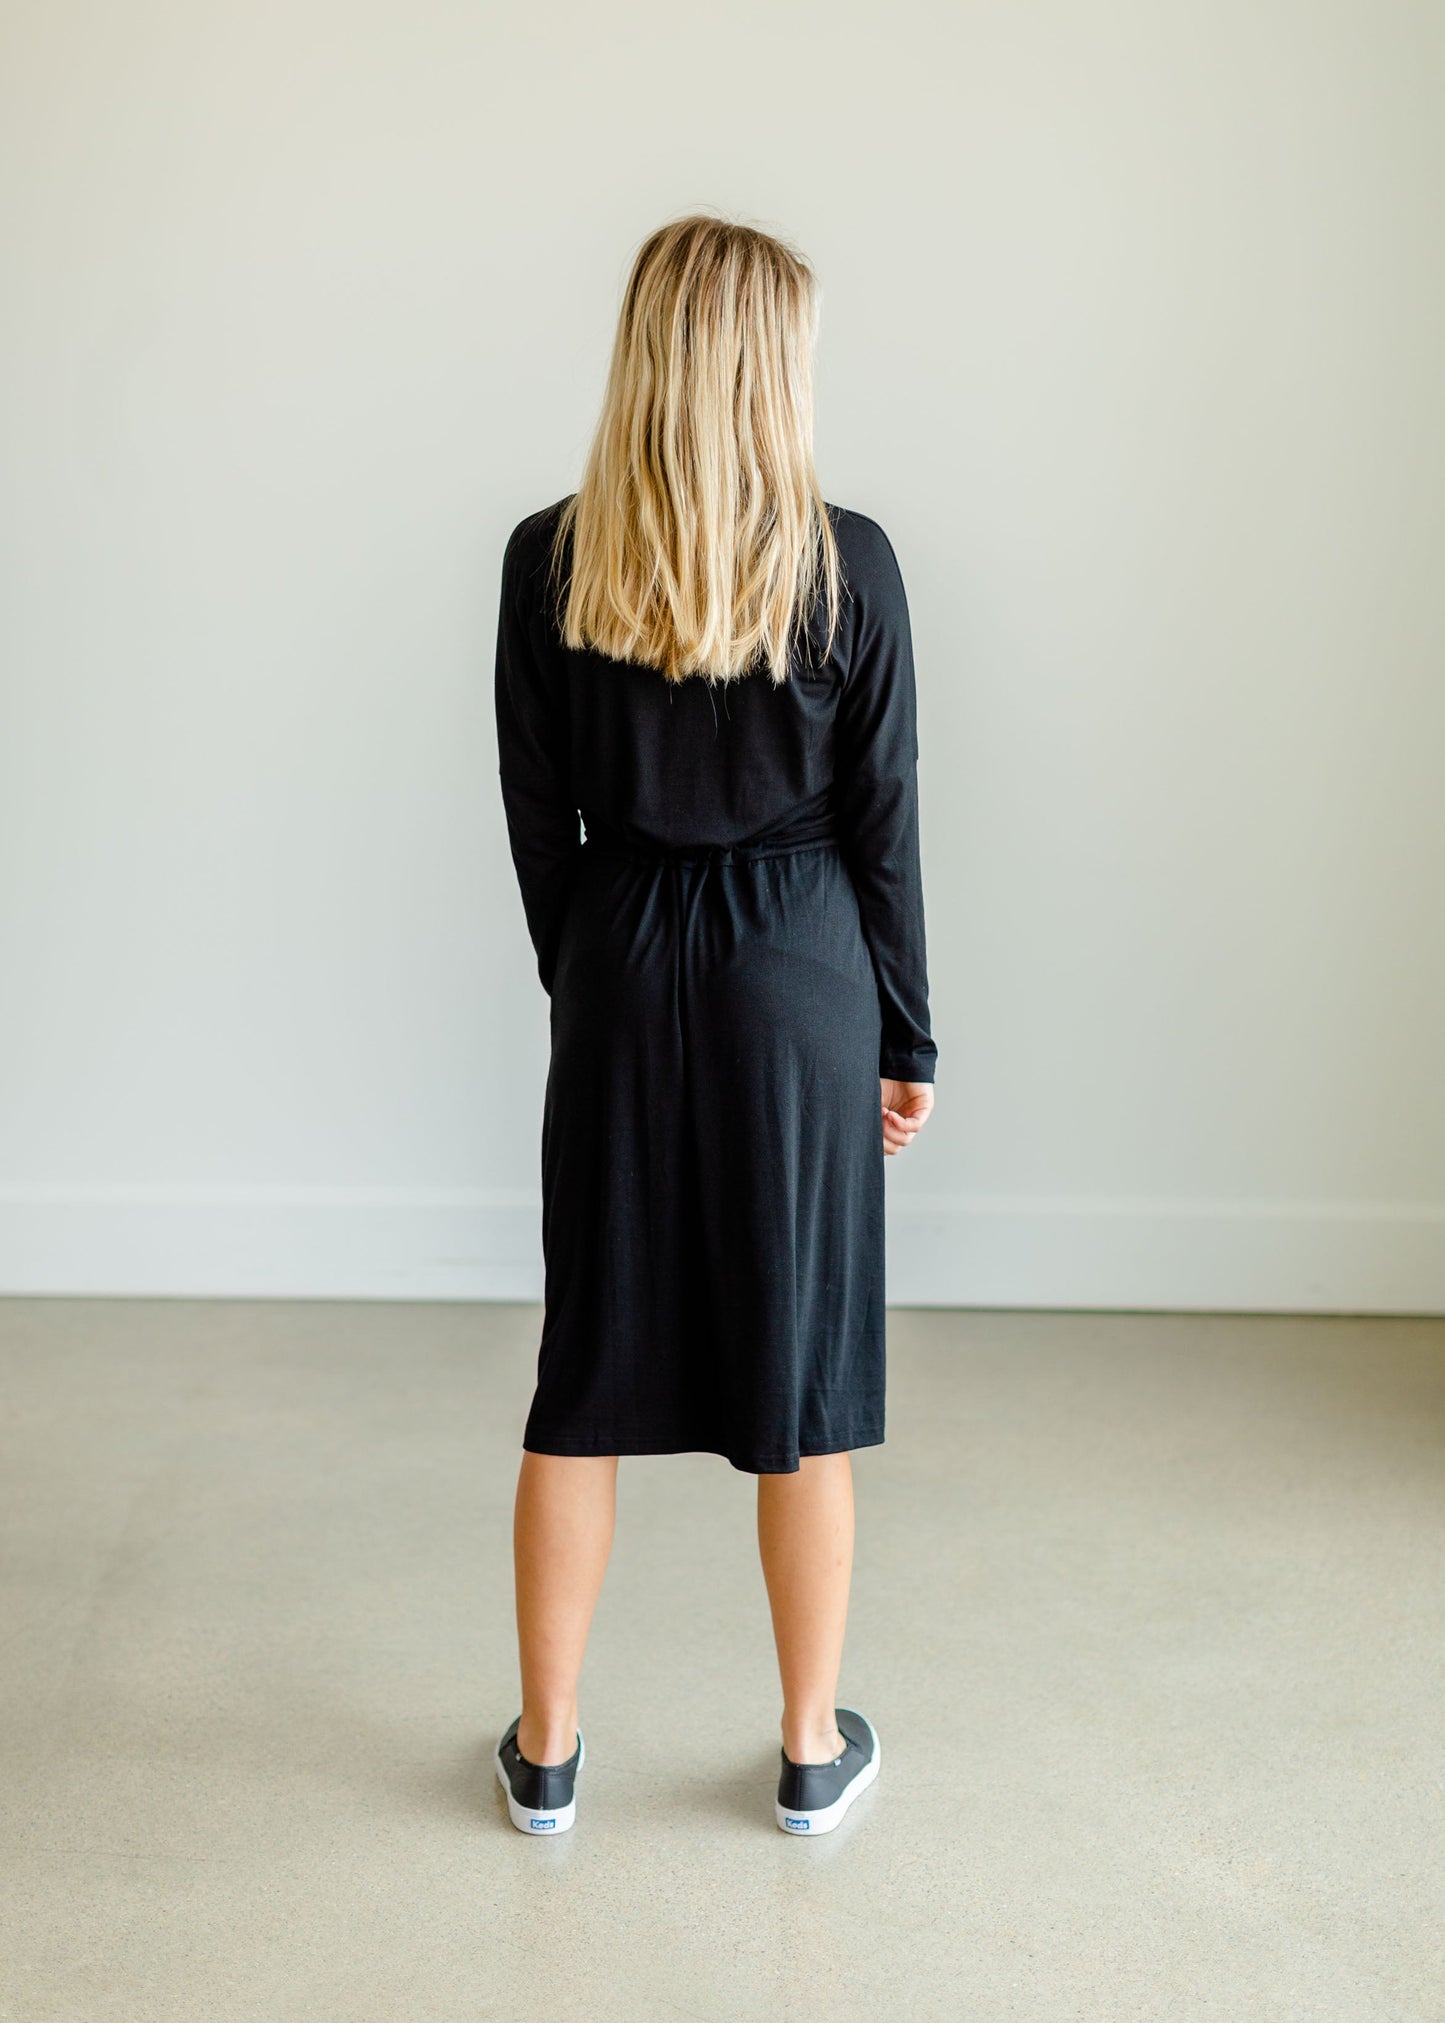 Terra Black Long Sleeve Midi Dress - FINAL SALE Dresses